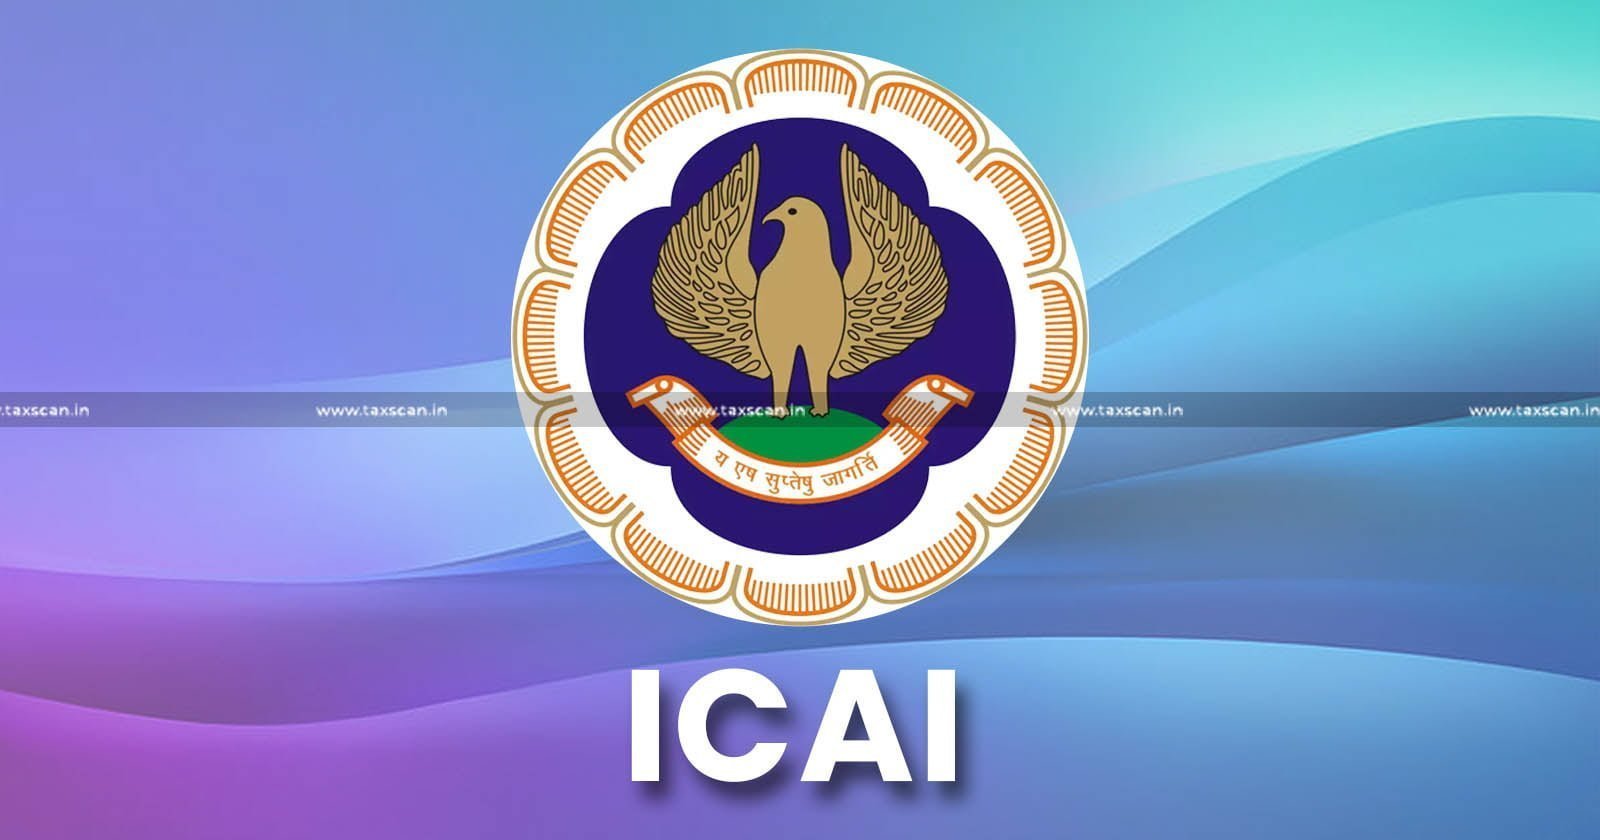 ICAI - CA Inter Examination - ICAI reschedules CA Inter Examination - reschedules CA Inter Examination - reschedules CA Inter Examination of 10th May - ICAI reschedules - taxscan